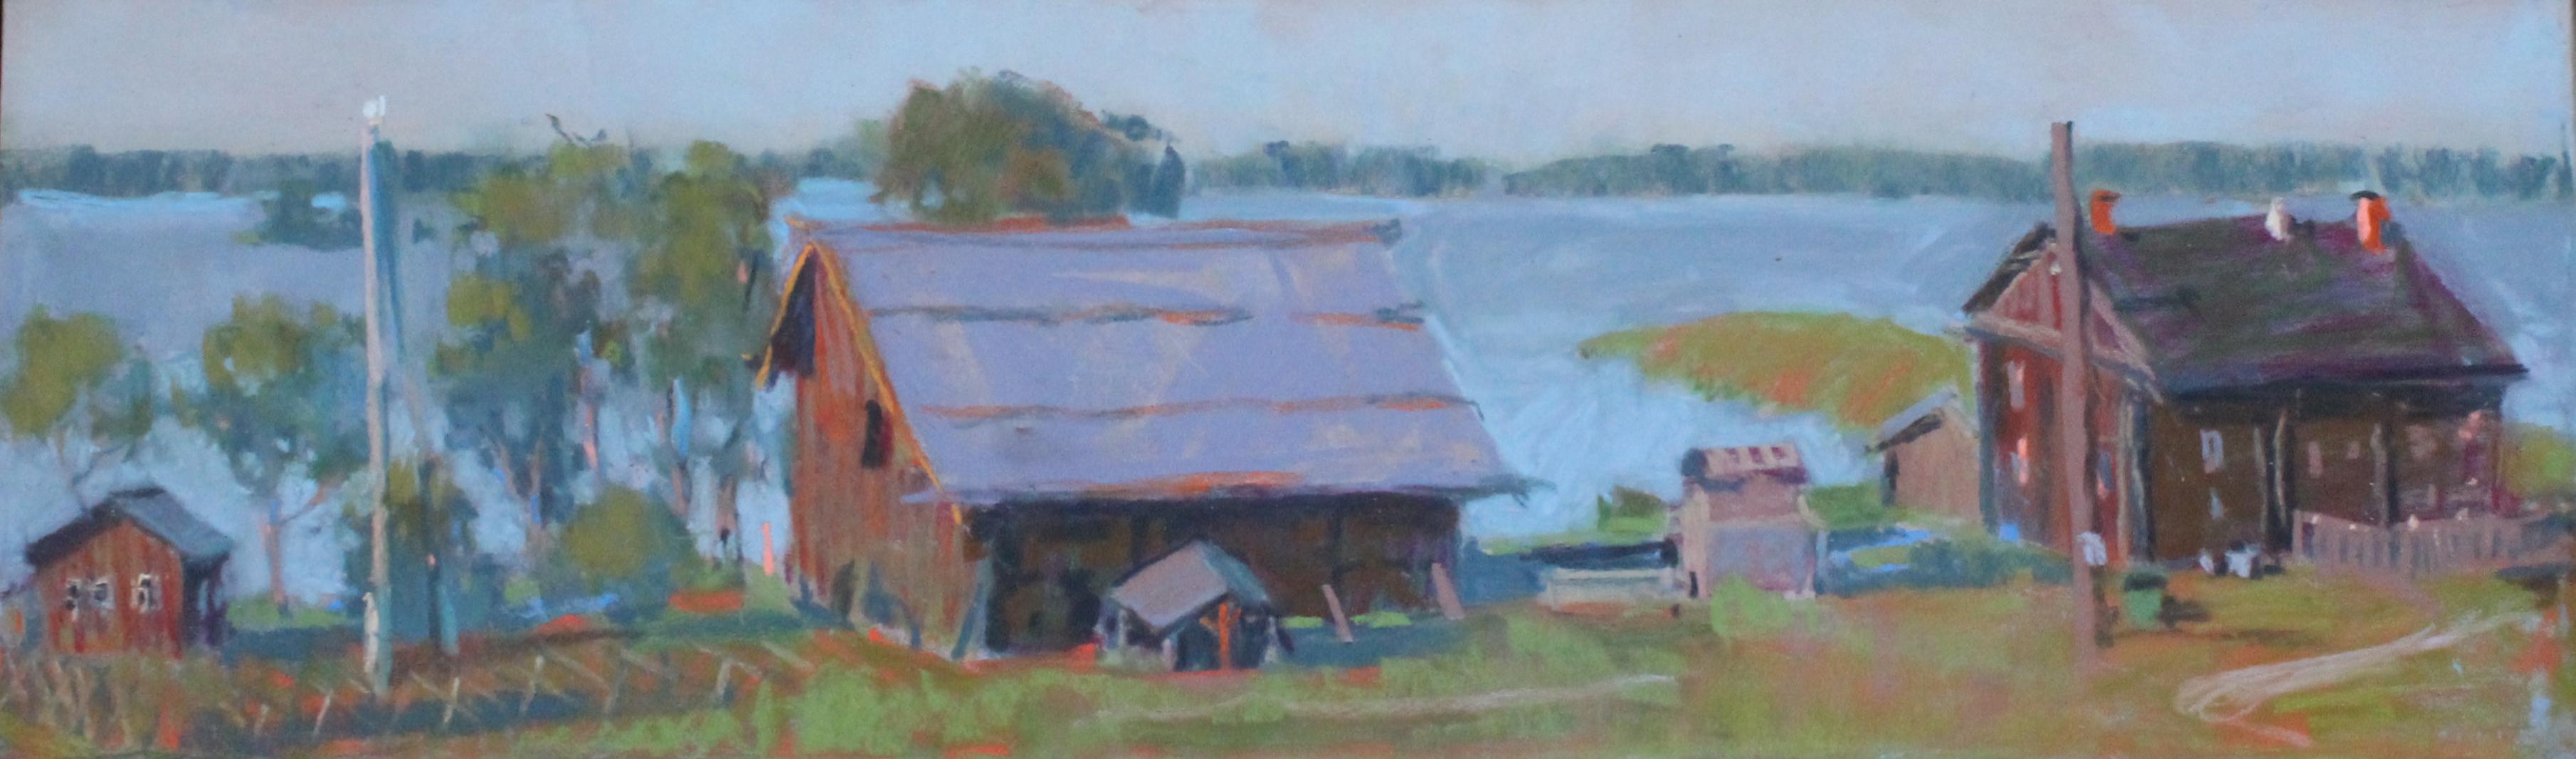 Kizhi Island. Yamki village. Original modern art painting